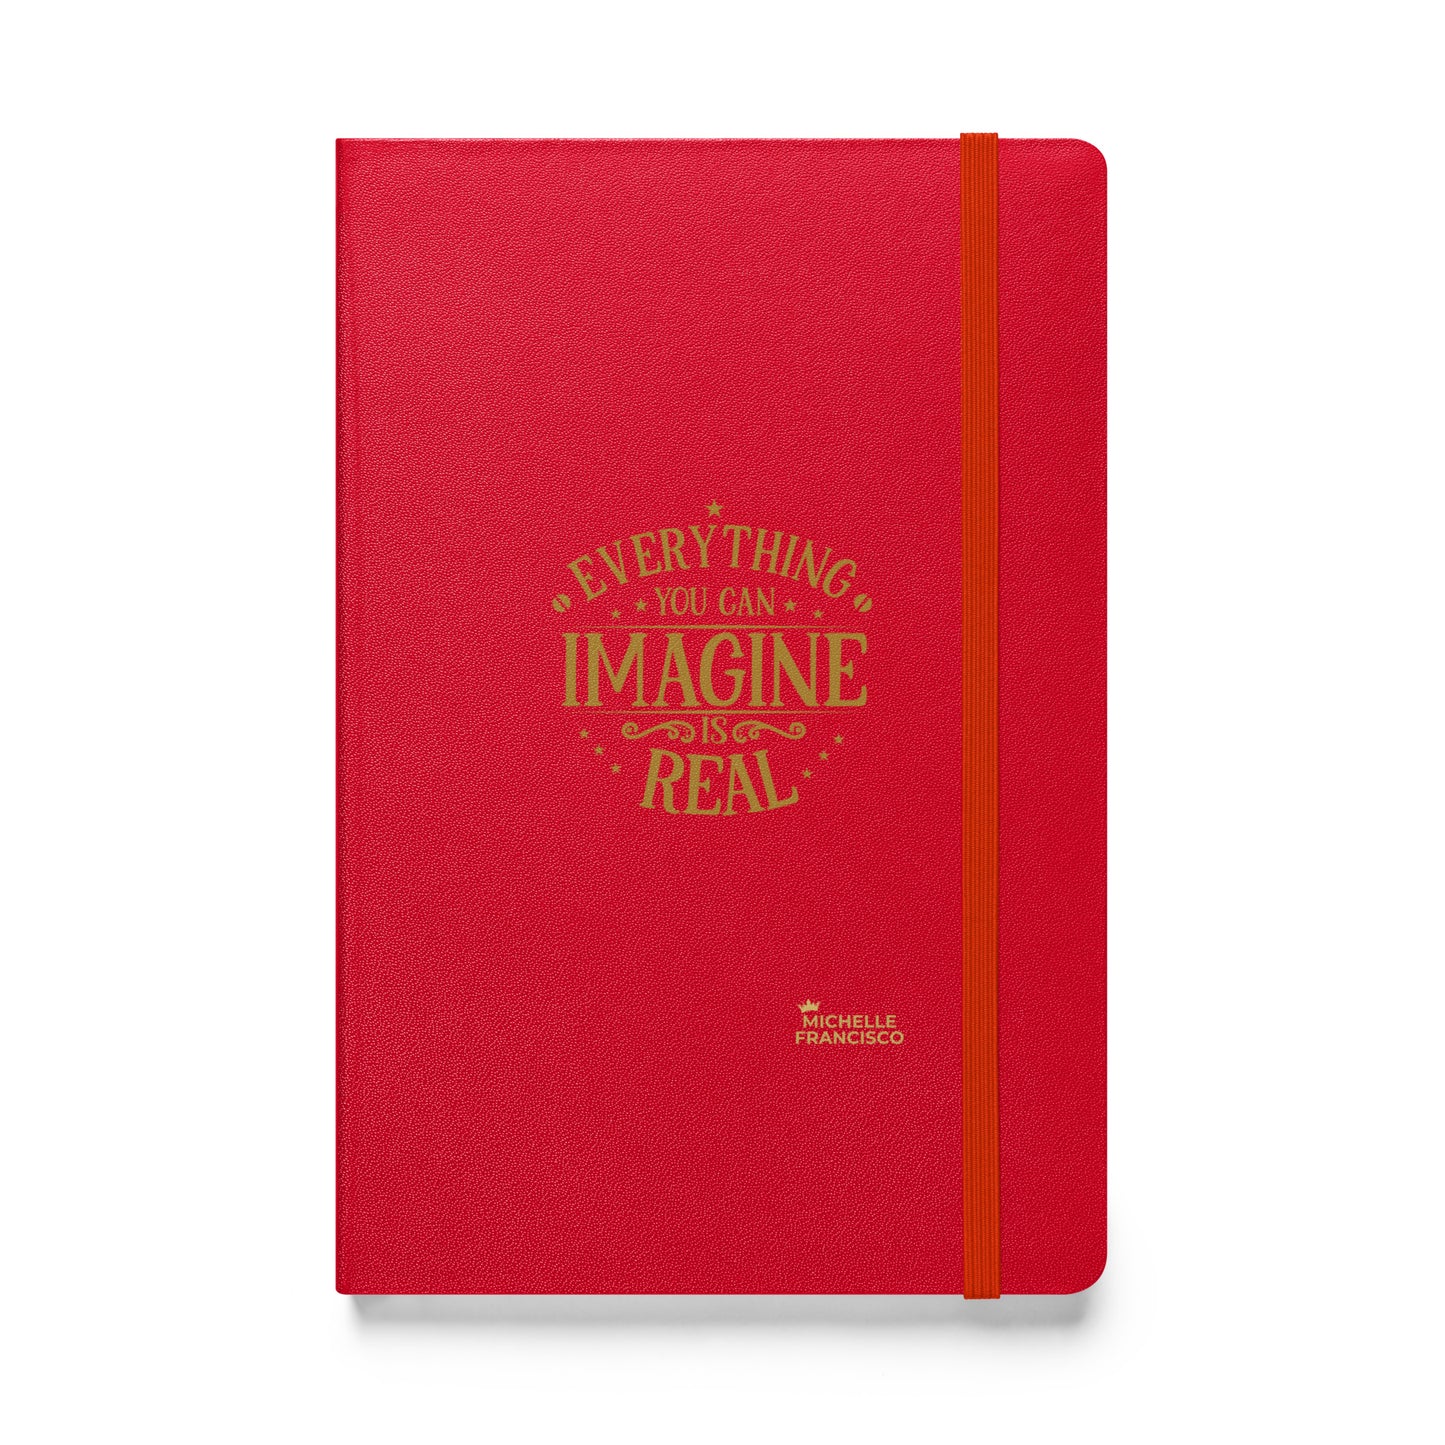 Imagination Hardcover Bound Notebook